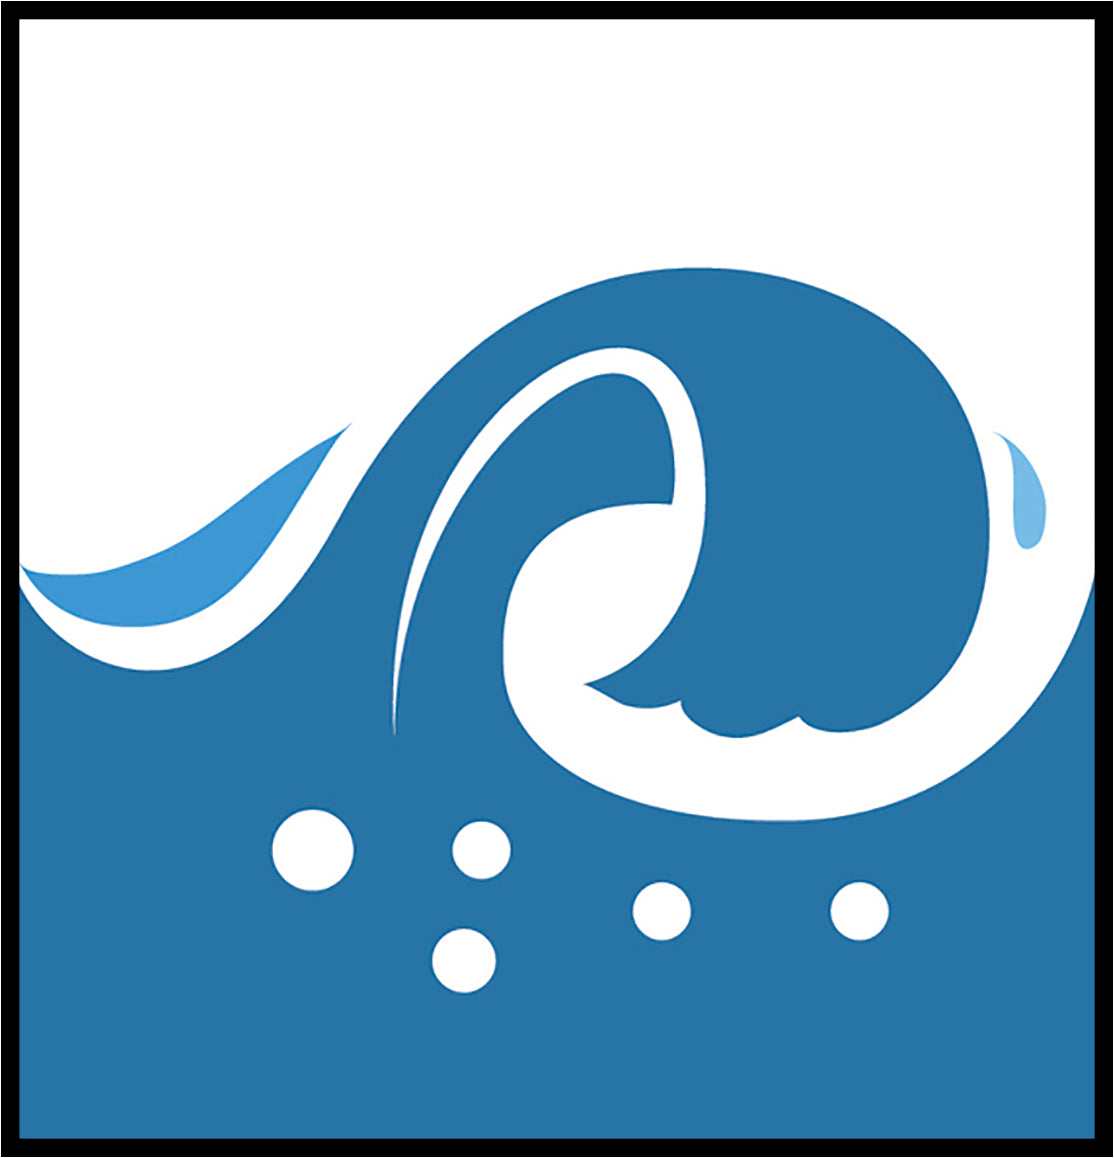 Cool Simple Ocean Sea Waves Cartoon Logo Icon #12 Border Around Image As Shown Vinyl Sticker